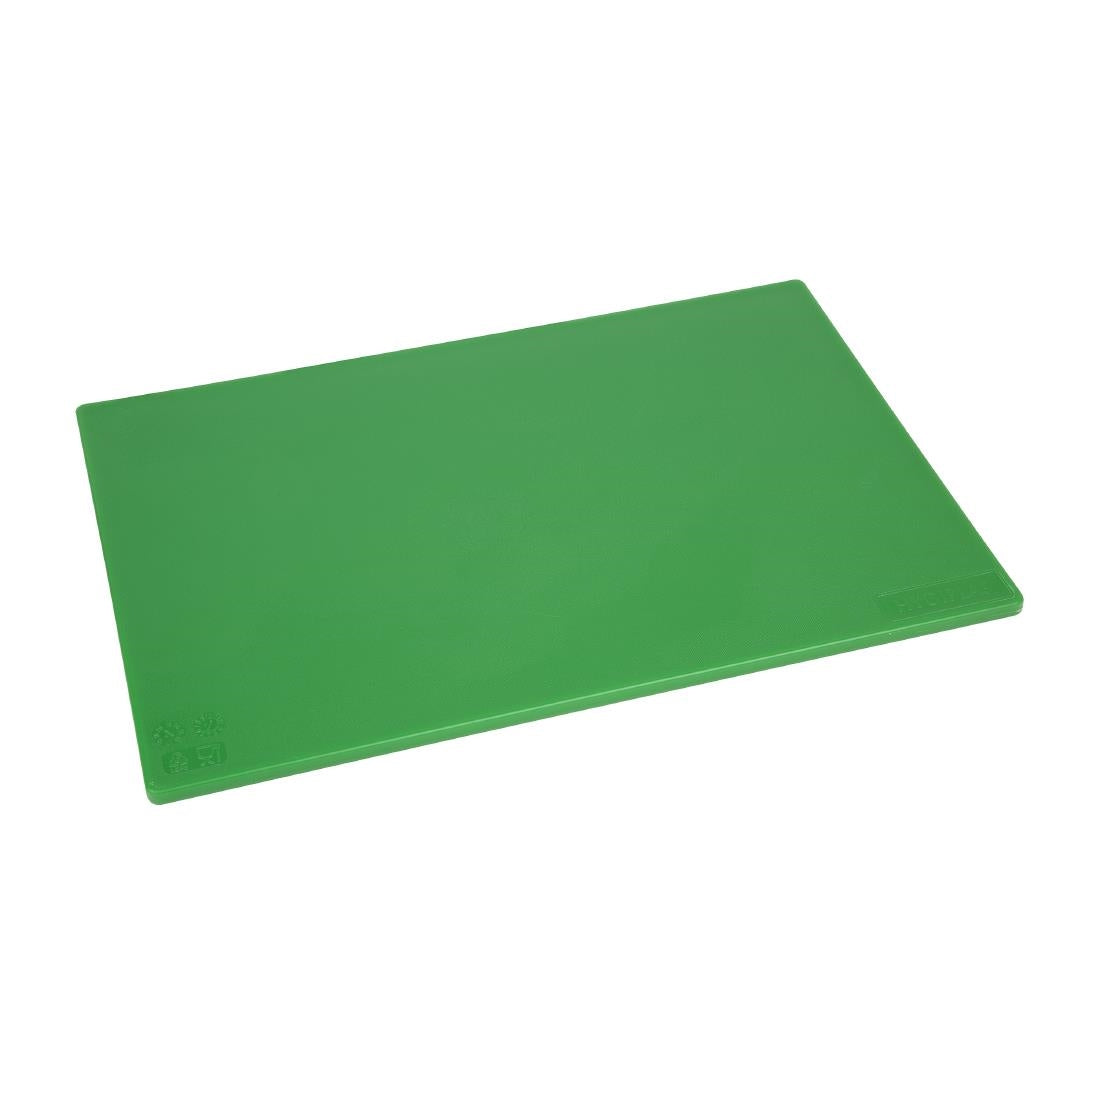 Hygiplas Low Density Green Chopping Board Standard JD Catering Equipment Solutions Ltd